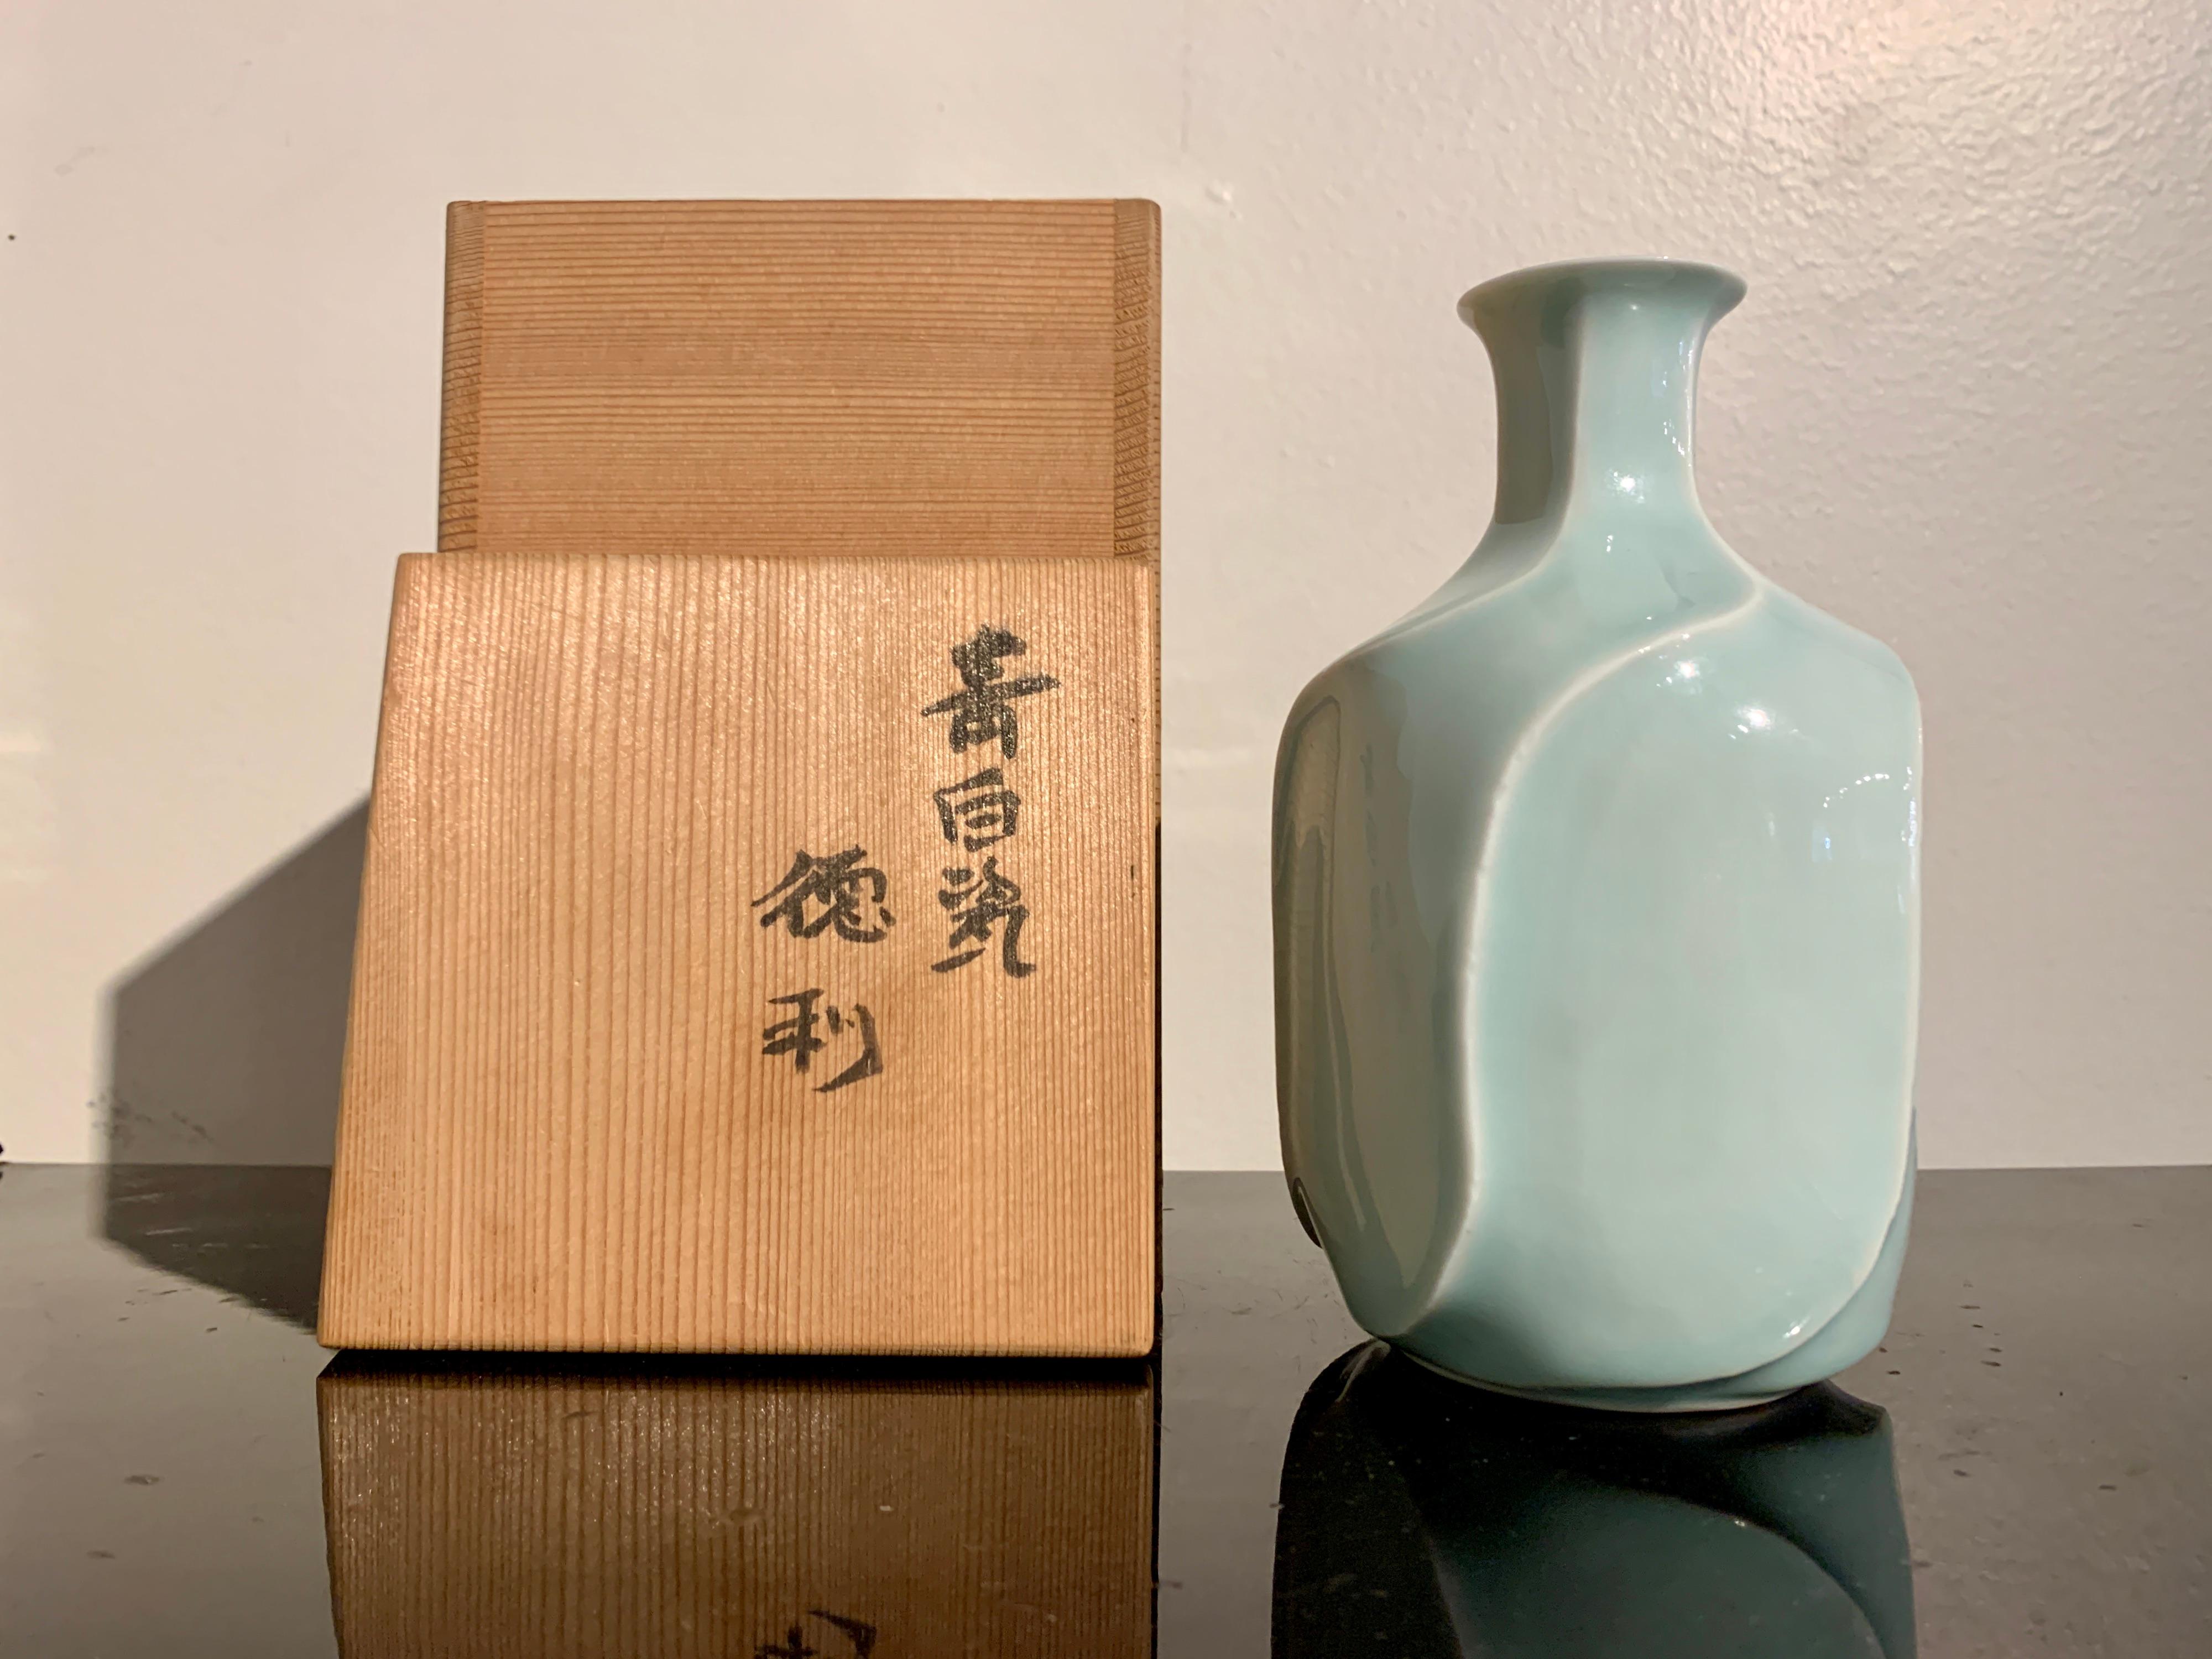 A sublime and elegant seihakuji (qingbai or celadon) glazed porcelain tokkuri (sake bottle) by Miyanaga Tozan III, also known as Miyanaga Rikichi, (b. 1935), Showa Period, circa 1980's, Japan.

The sake bottle, called a tokkuri, is delicately potted